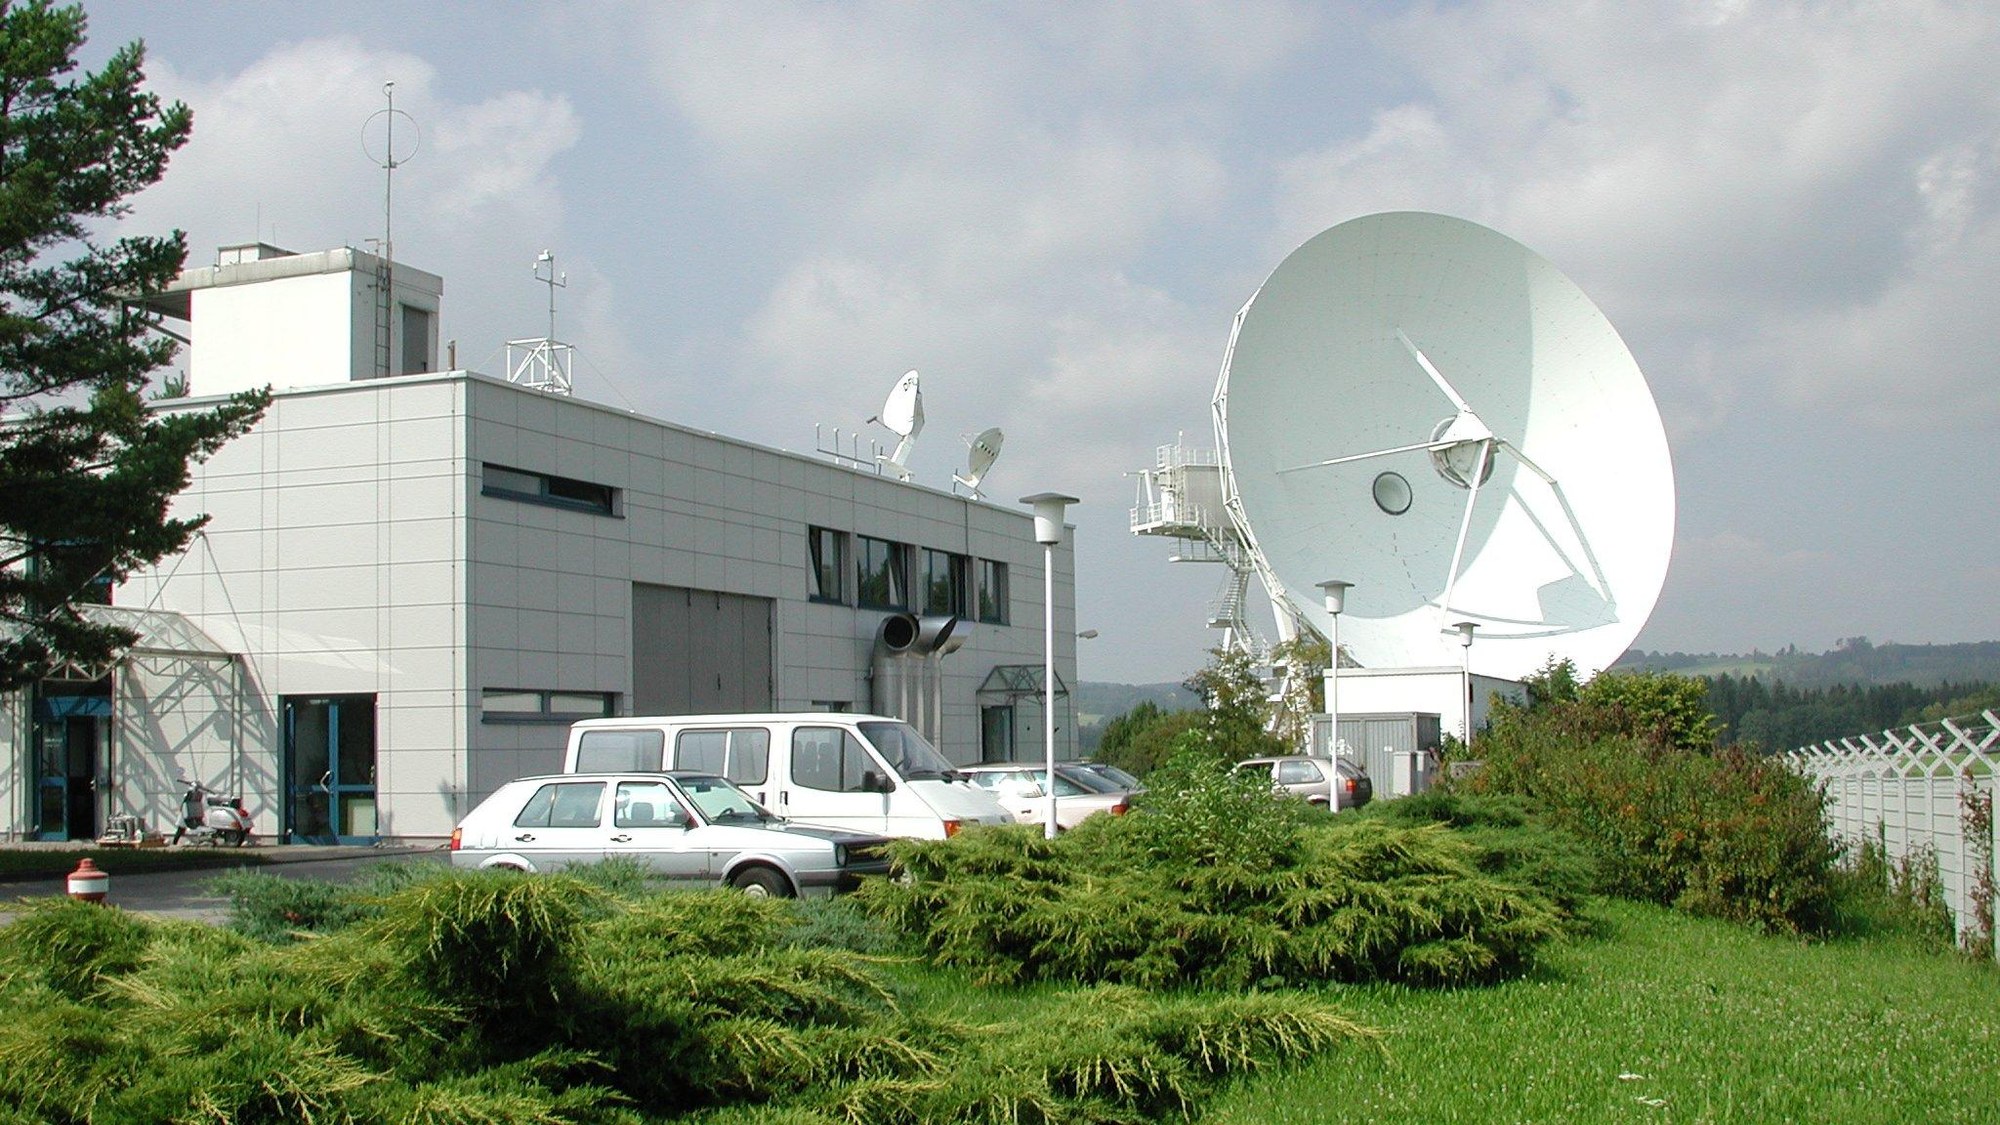 DLR's Weilheim site with the 30-metre antenna